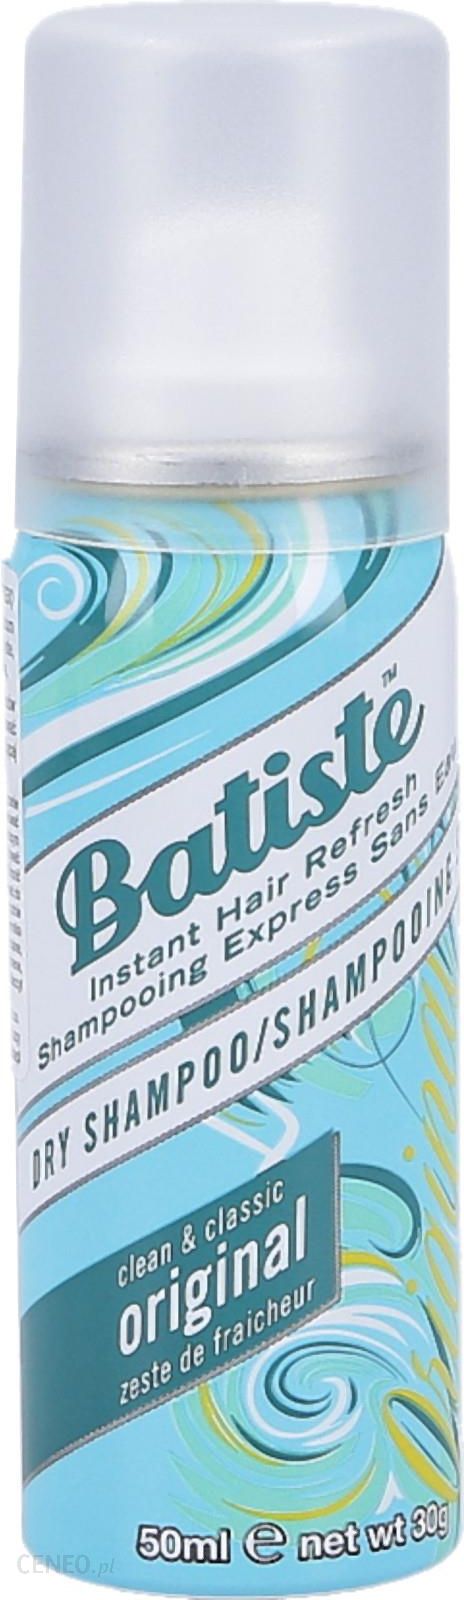 suchy szampon batiste ceneo